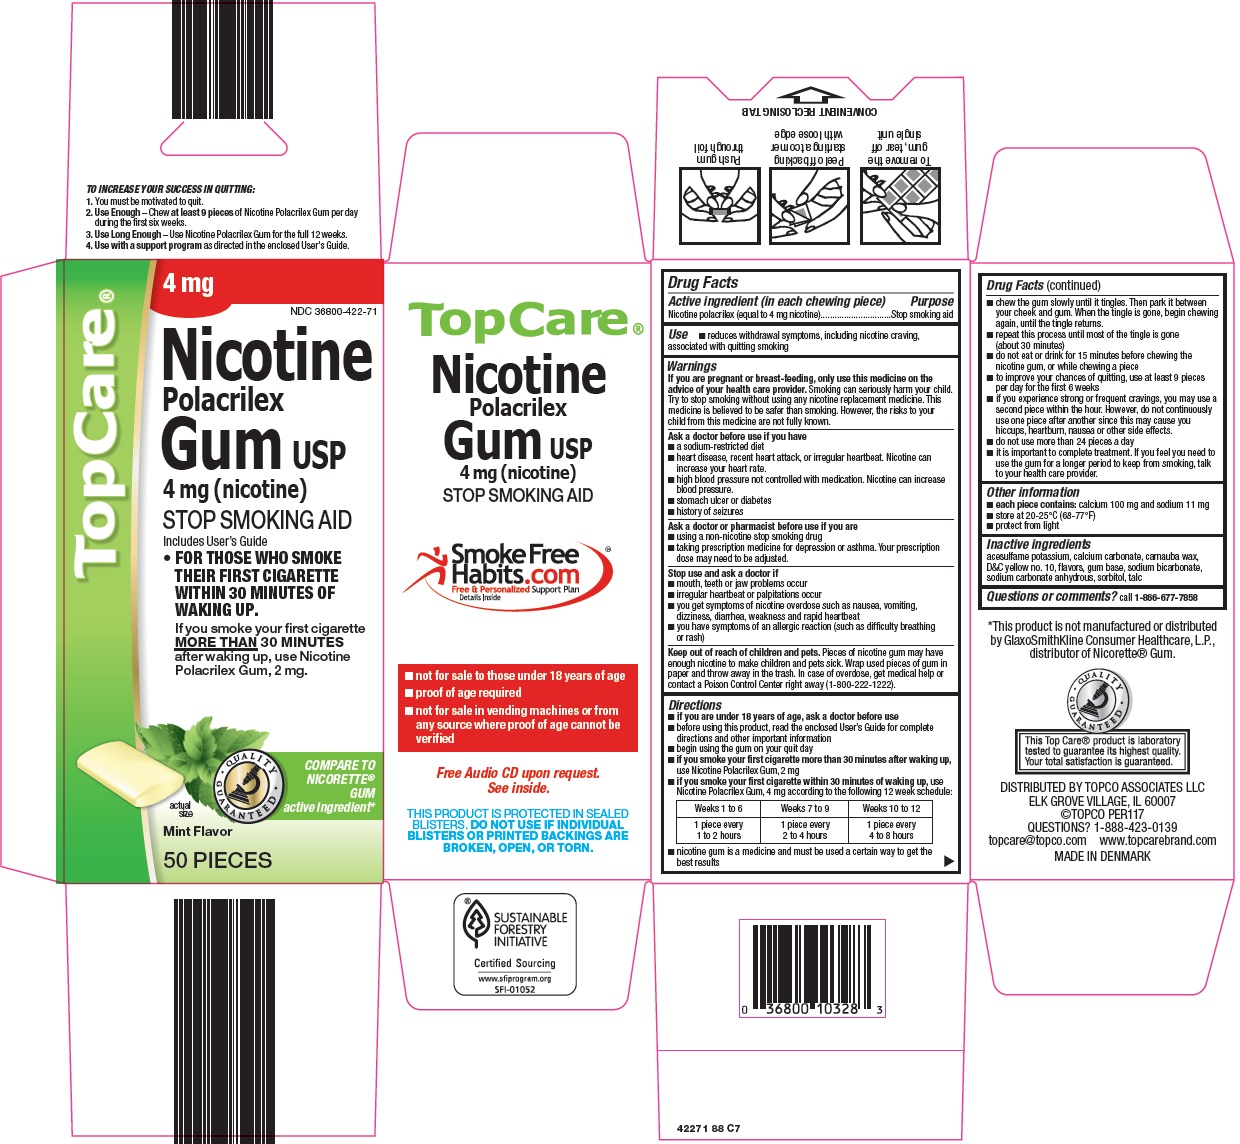 nicotine gum image